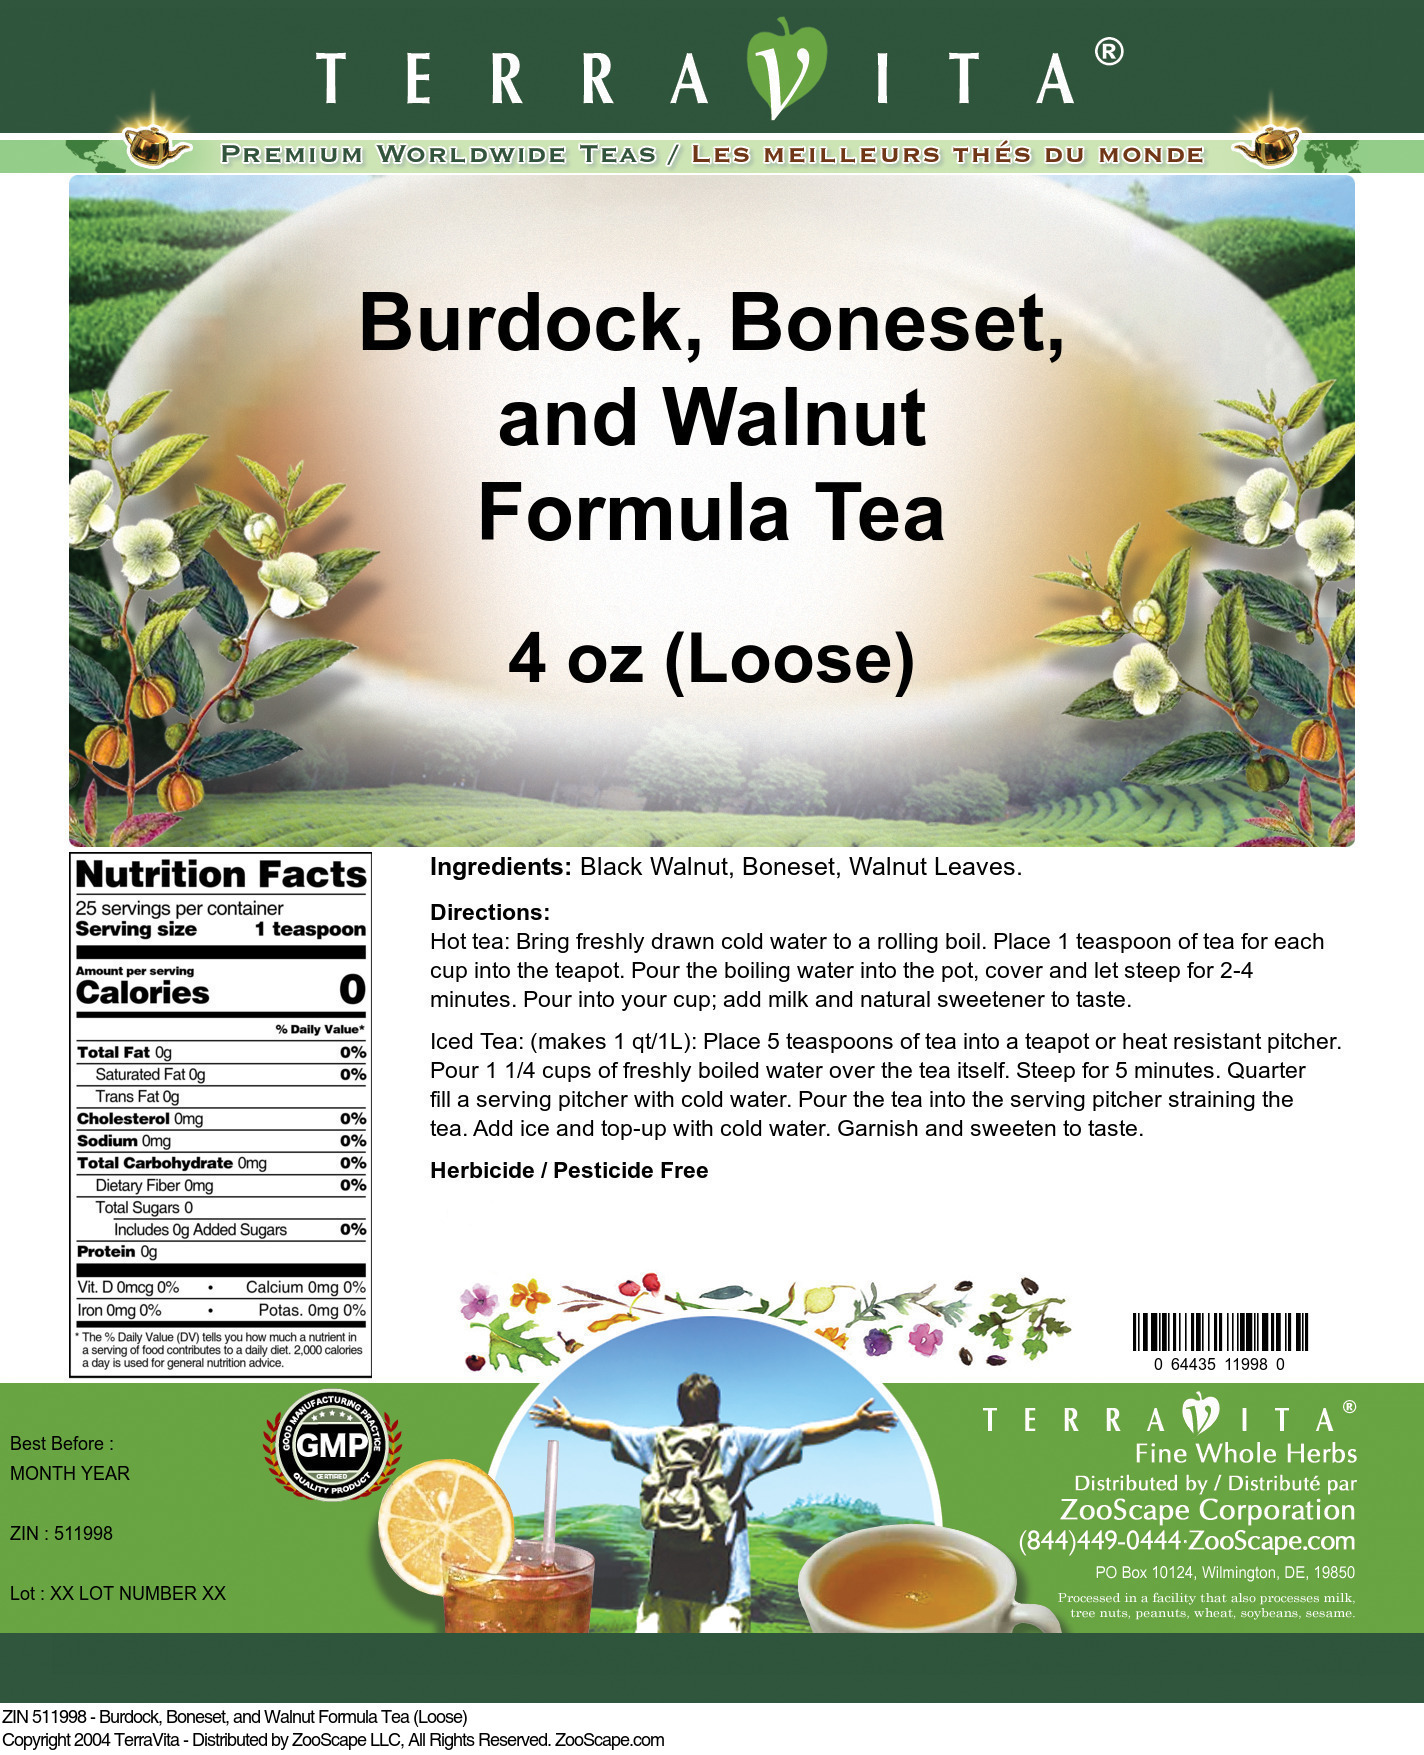 Burdock, Boneset, and Walnut Formula Tea (Loose) - Label